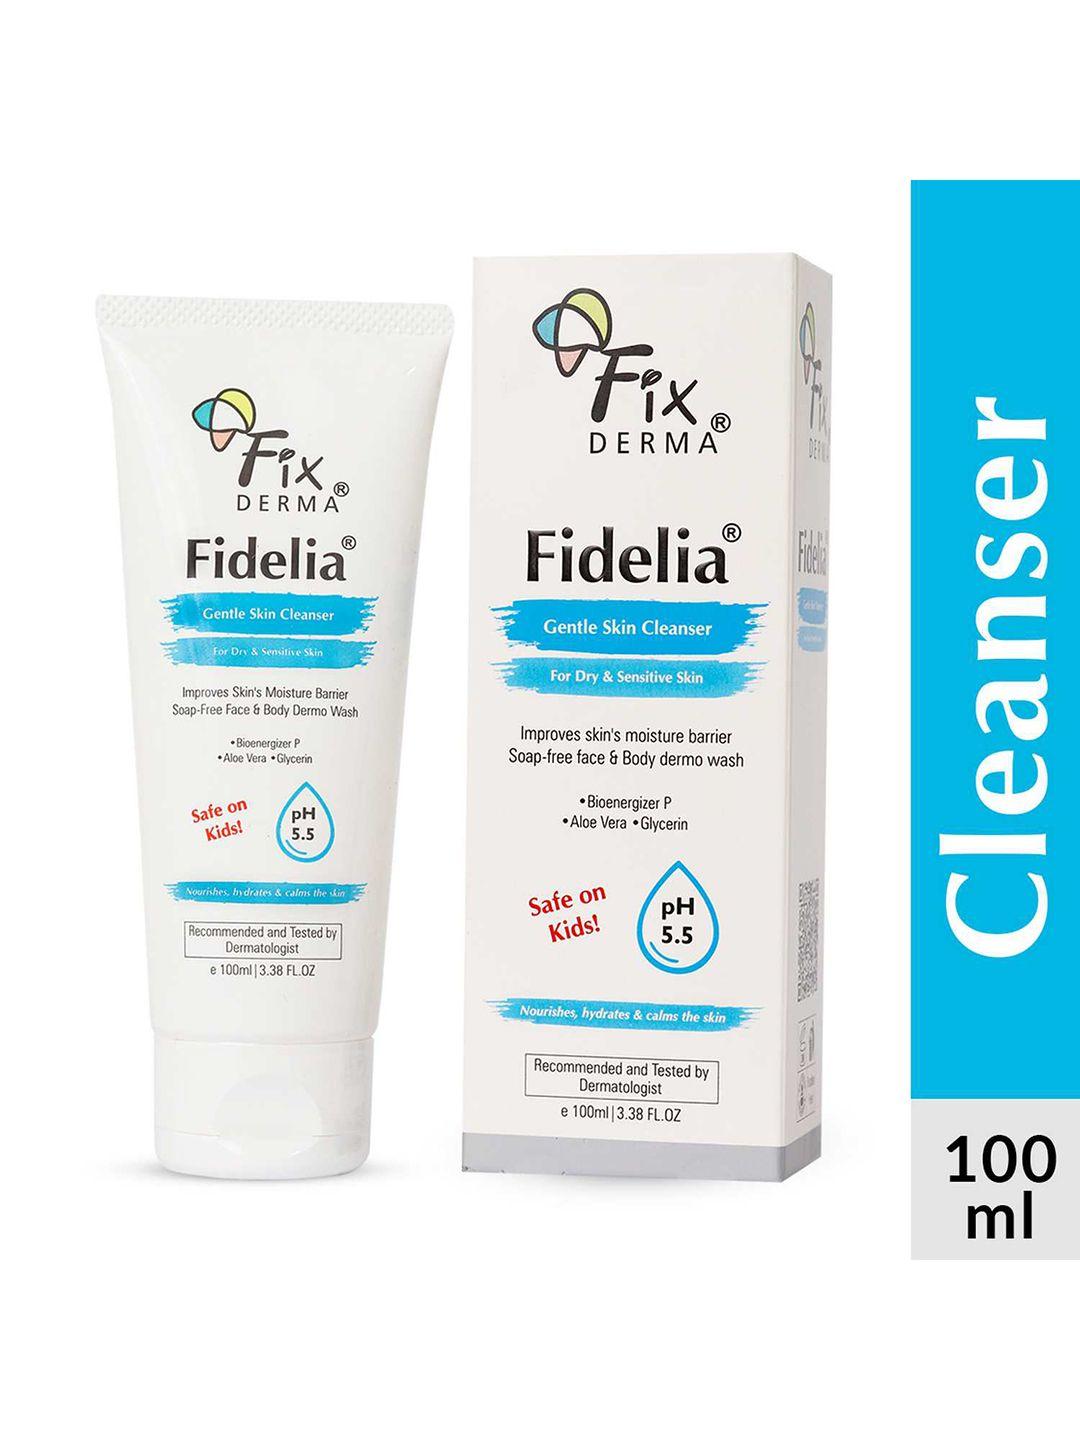 fixderma fidelia ph 5.5 gentle skin cleanser for dry & sensitive skin - 100ml